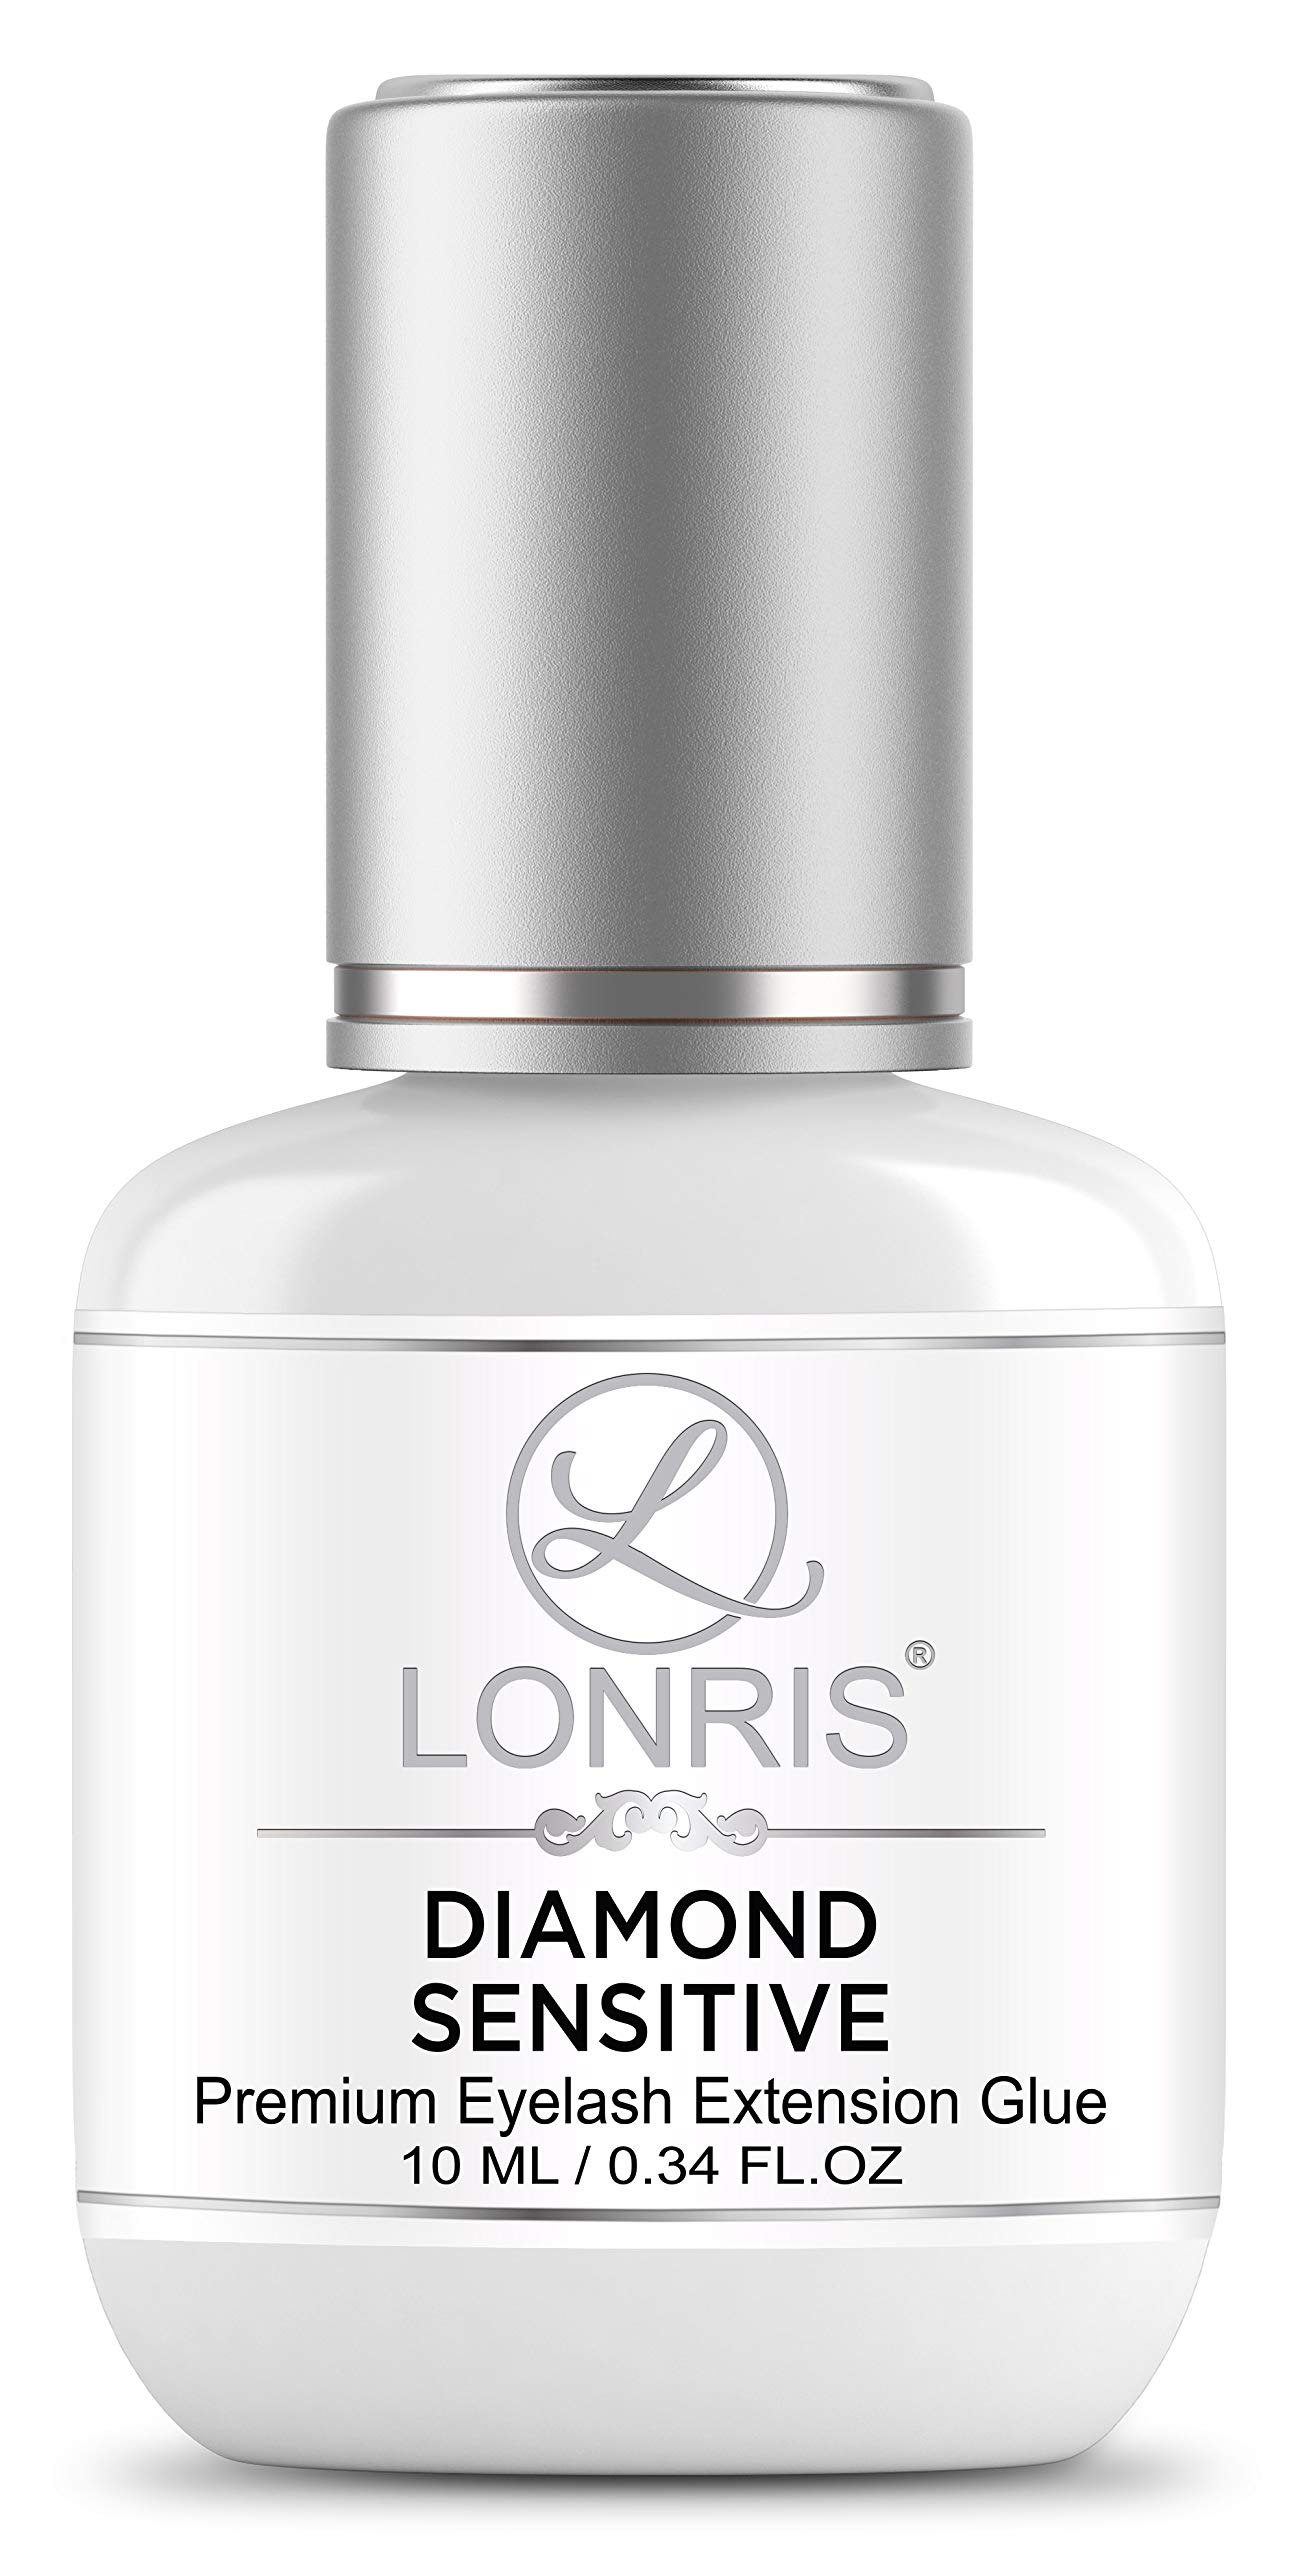 LONRIS LOW FUME Eyelash Extensions Glue - No Irritation - LONRIS Diamond Sensitive 10 ml - Professional Lash Adhesive for Beginners and